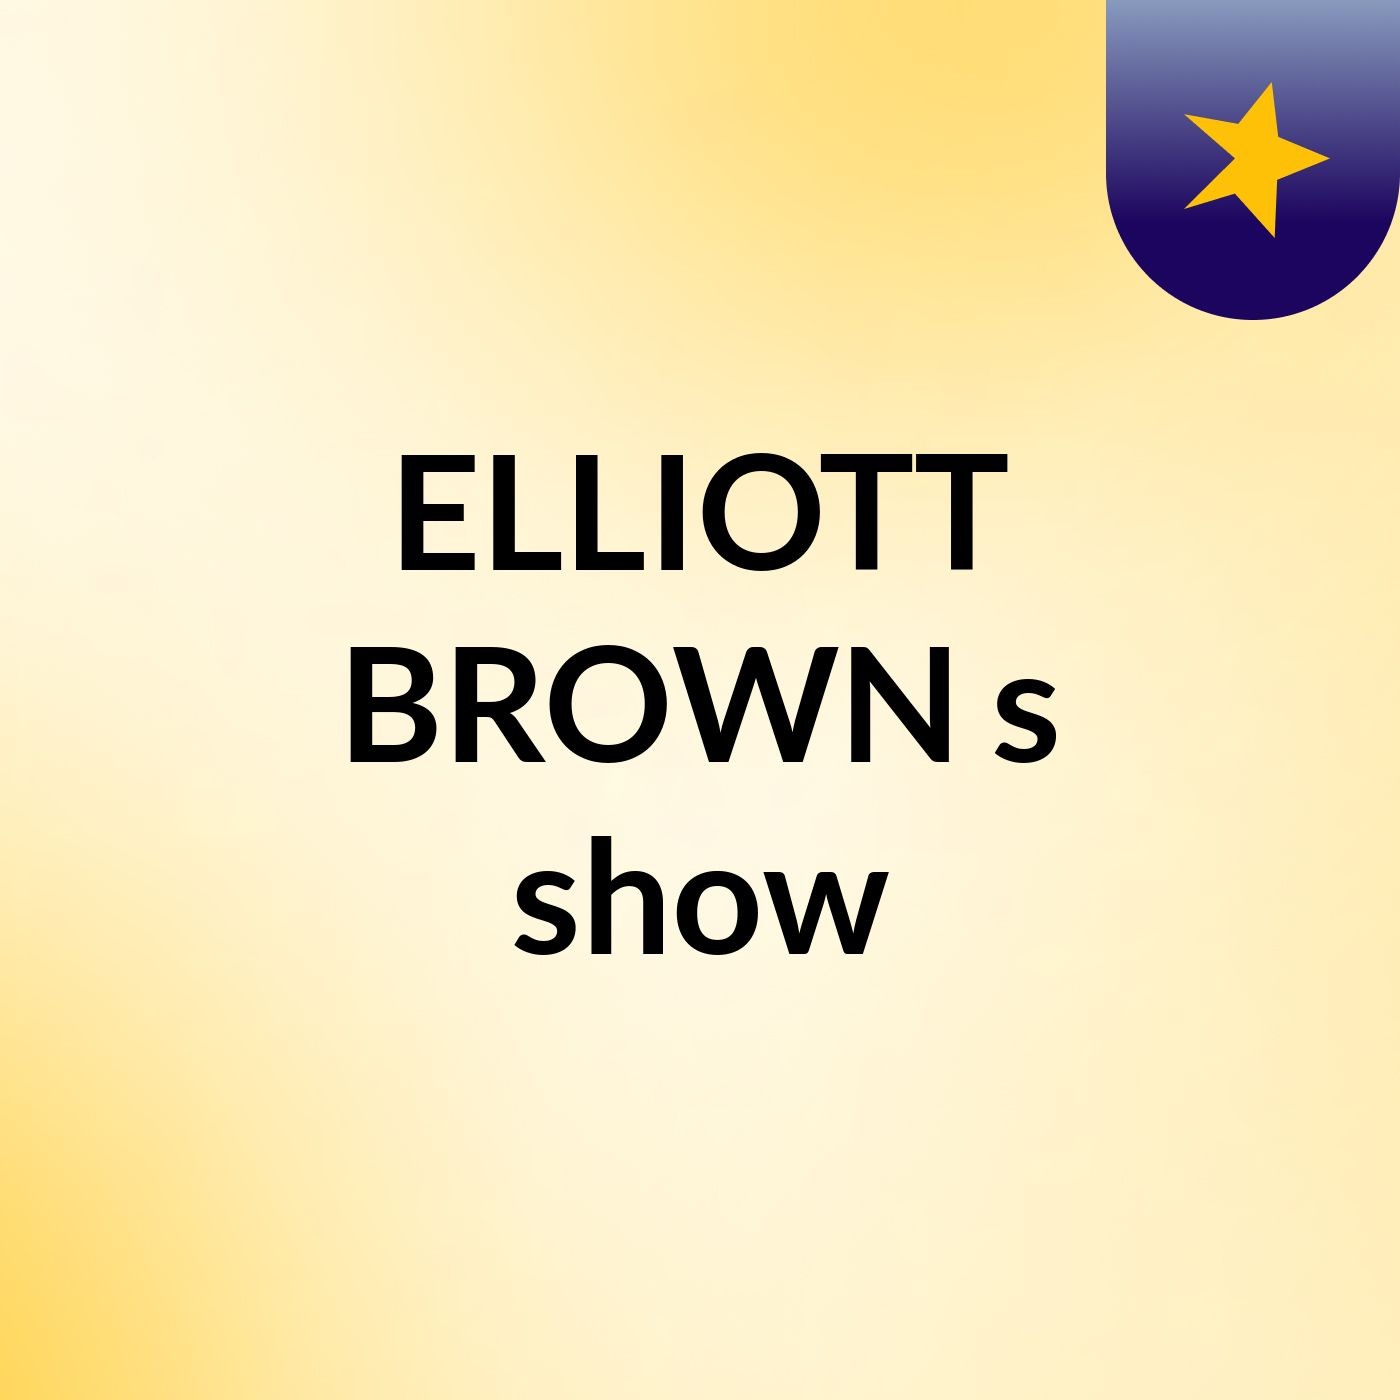 ELLIOTT BROWN's show